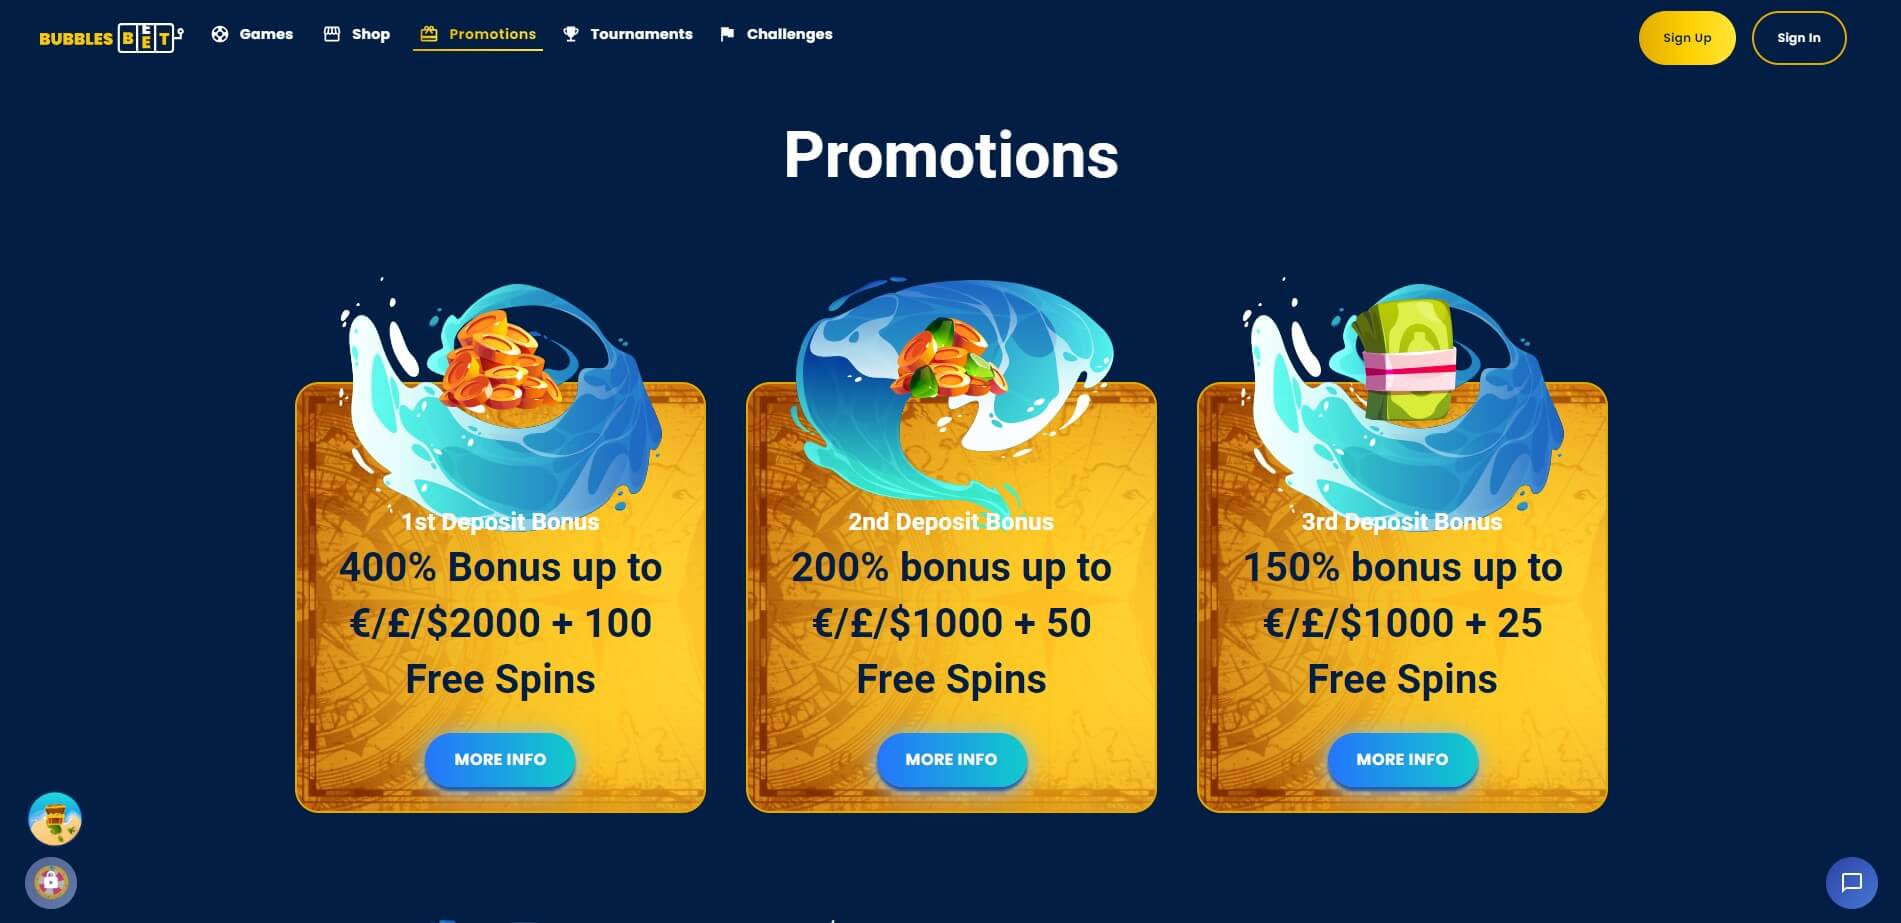 Bubbles Bet Casino Promotions